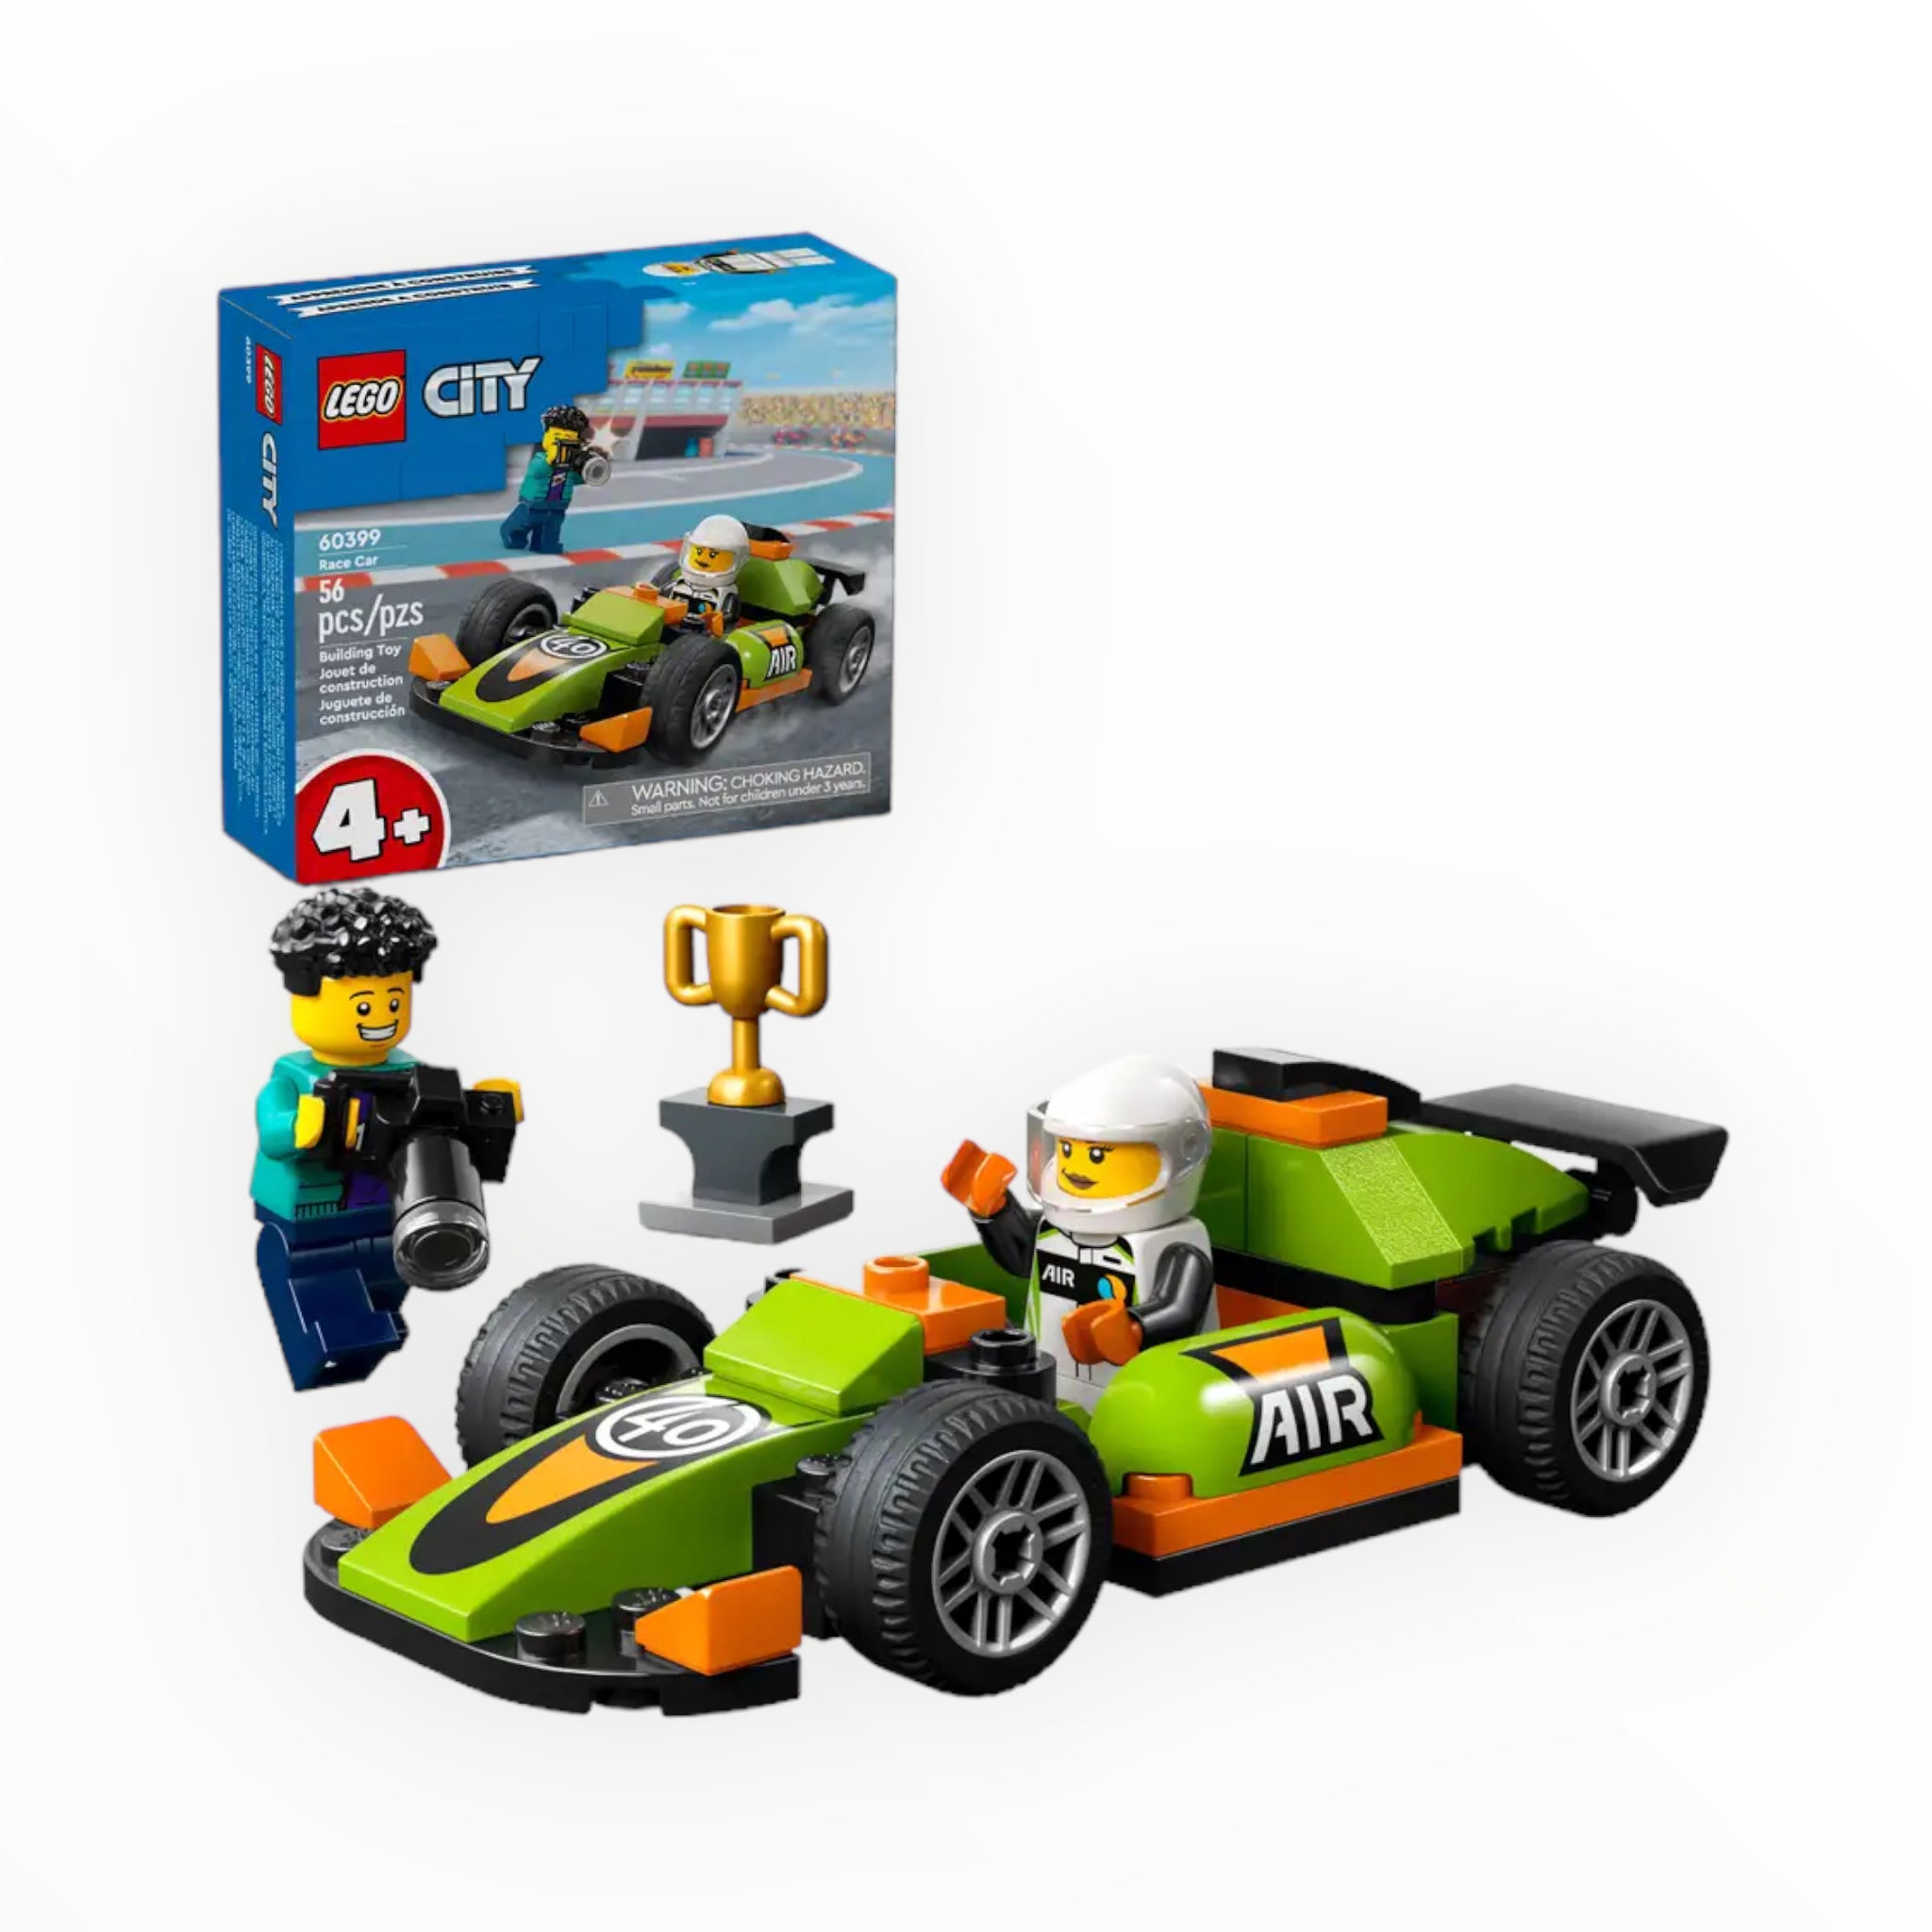 60399 City Green Race Car